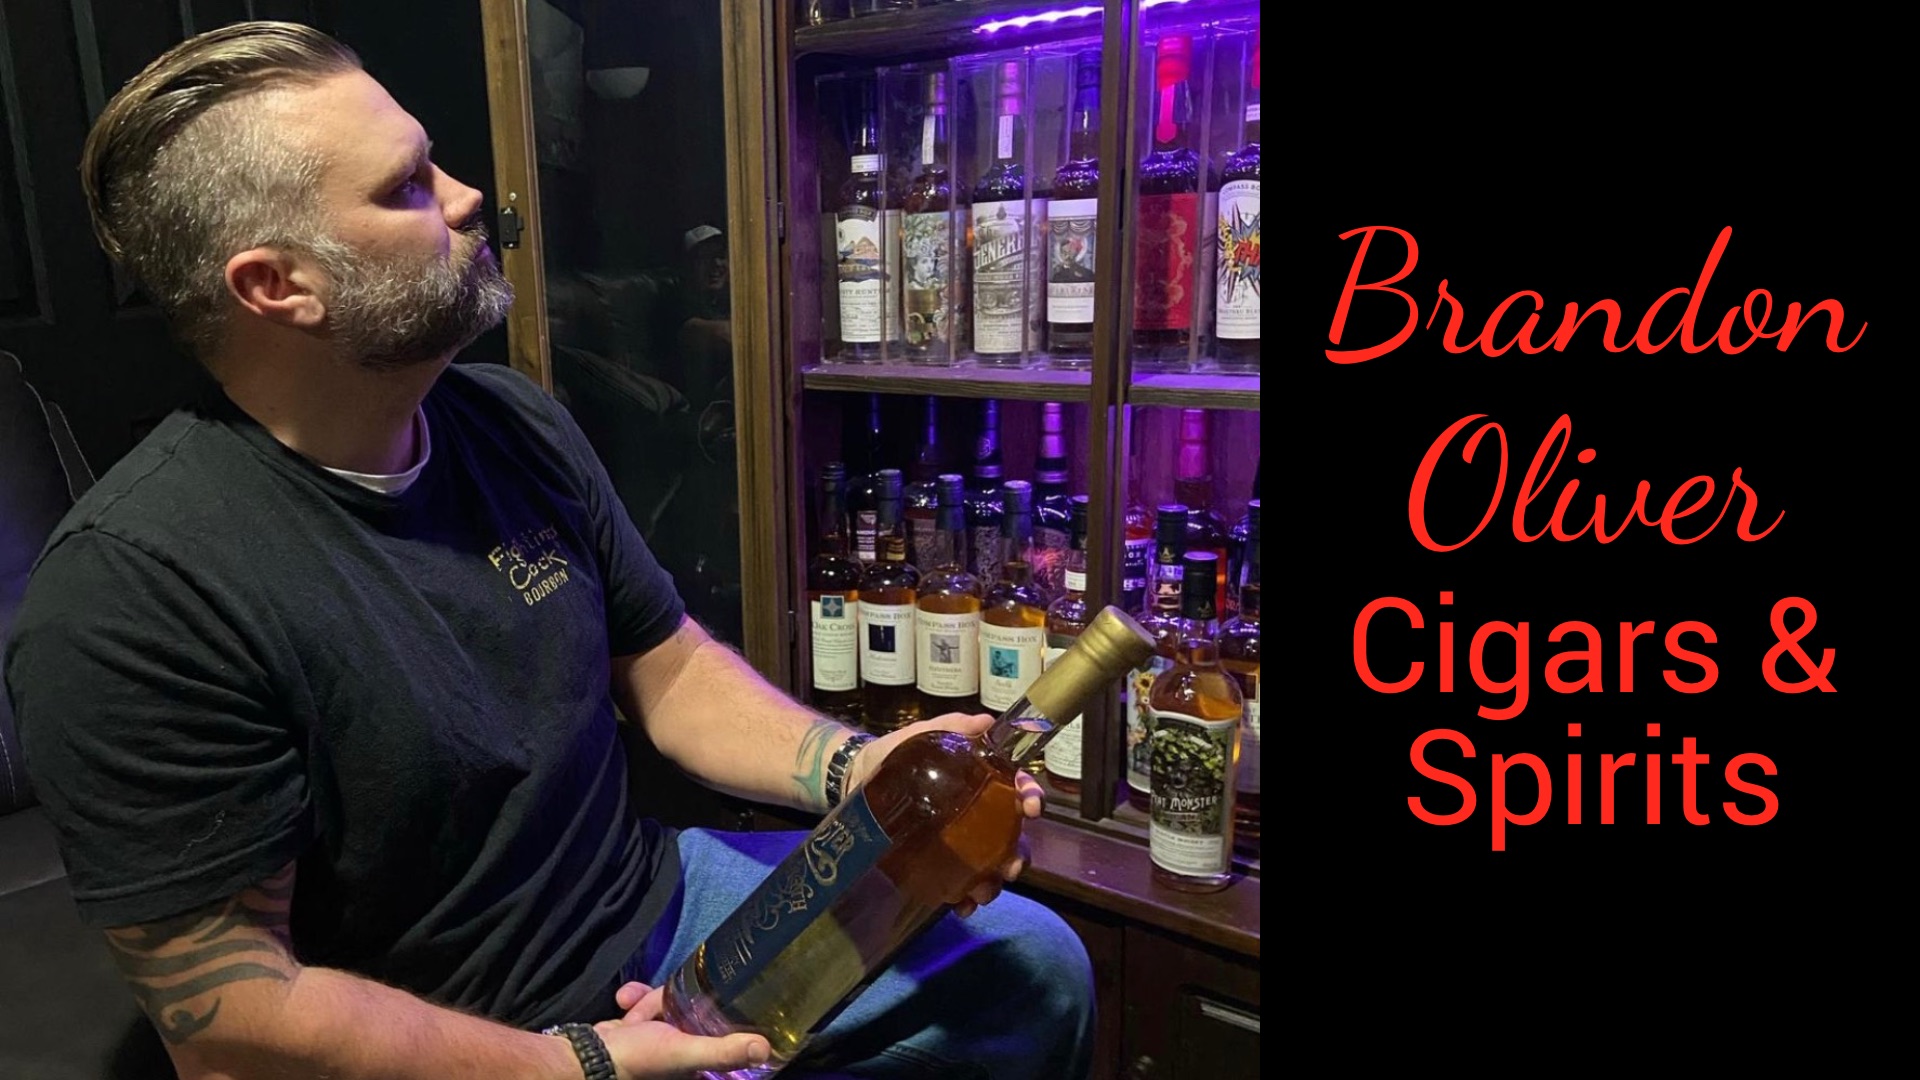 Hardins Creek Pairing Cigars & Spirits with Brandon Oliver